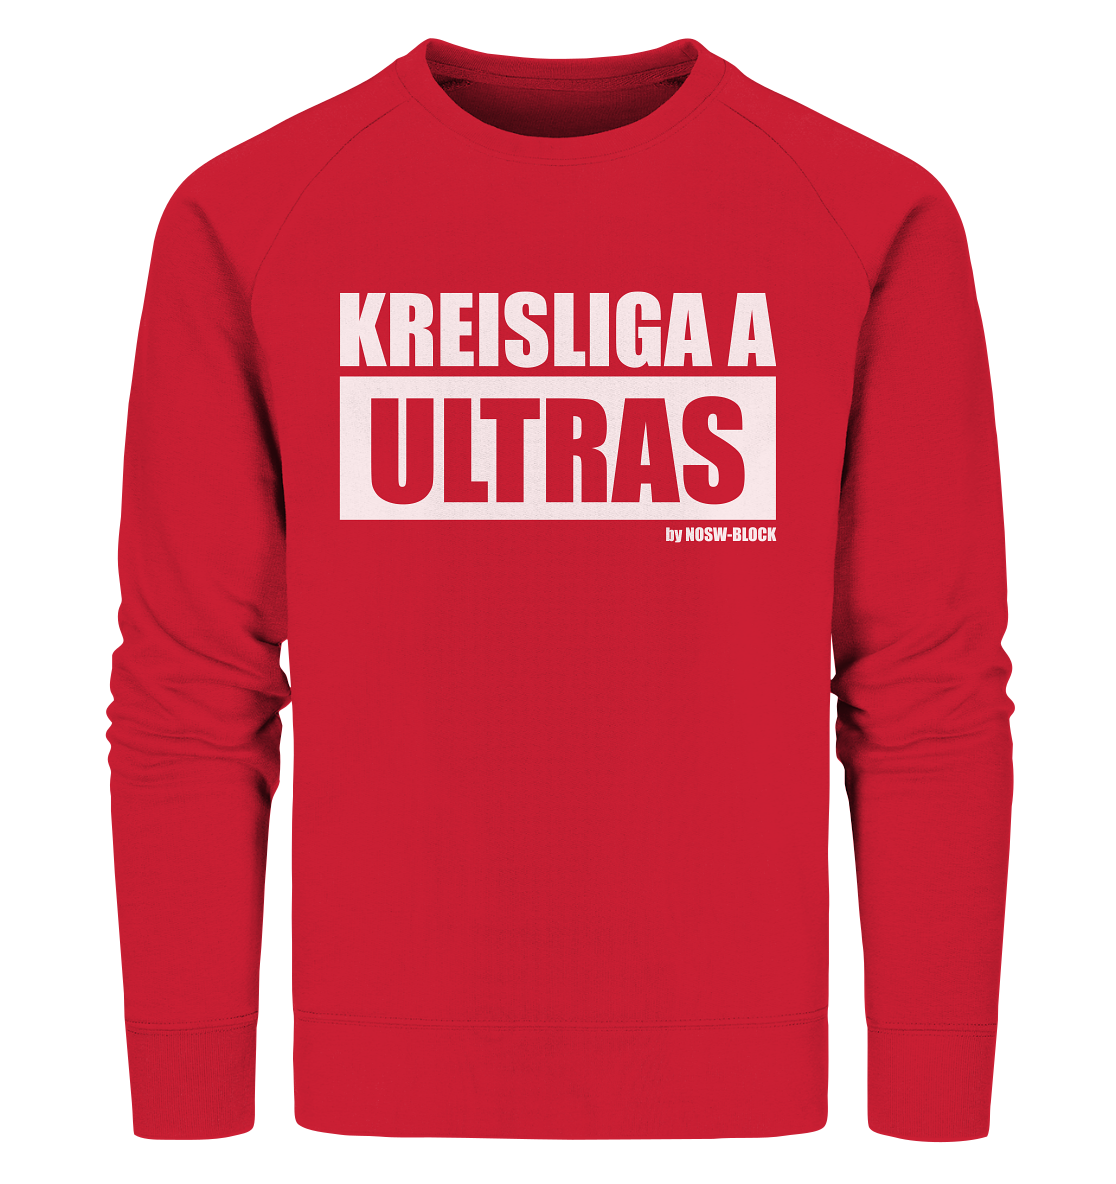 N.O.S.W. BLOCK Ultras Sweater "KREISLIGA A ULTRAS" Männer Organic Sweatshirt rot